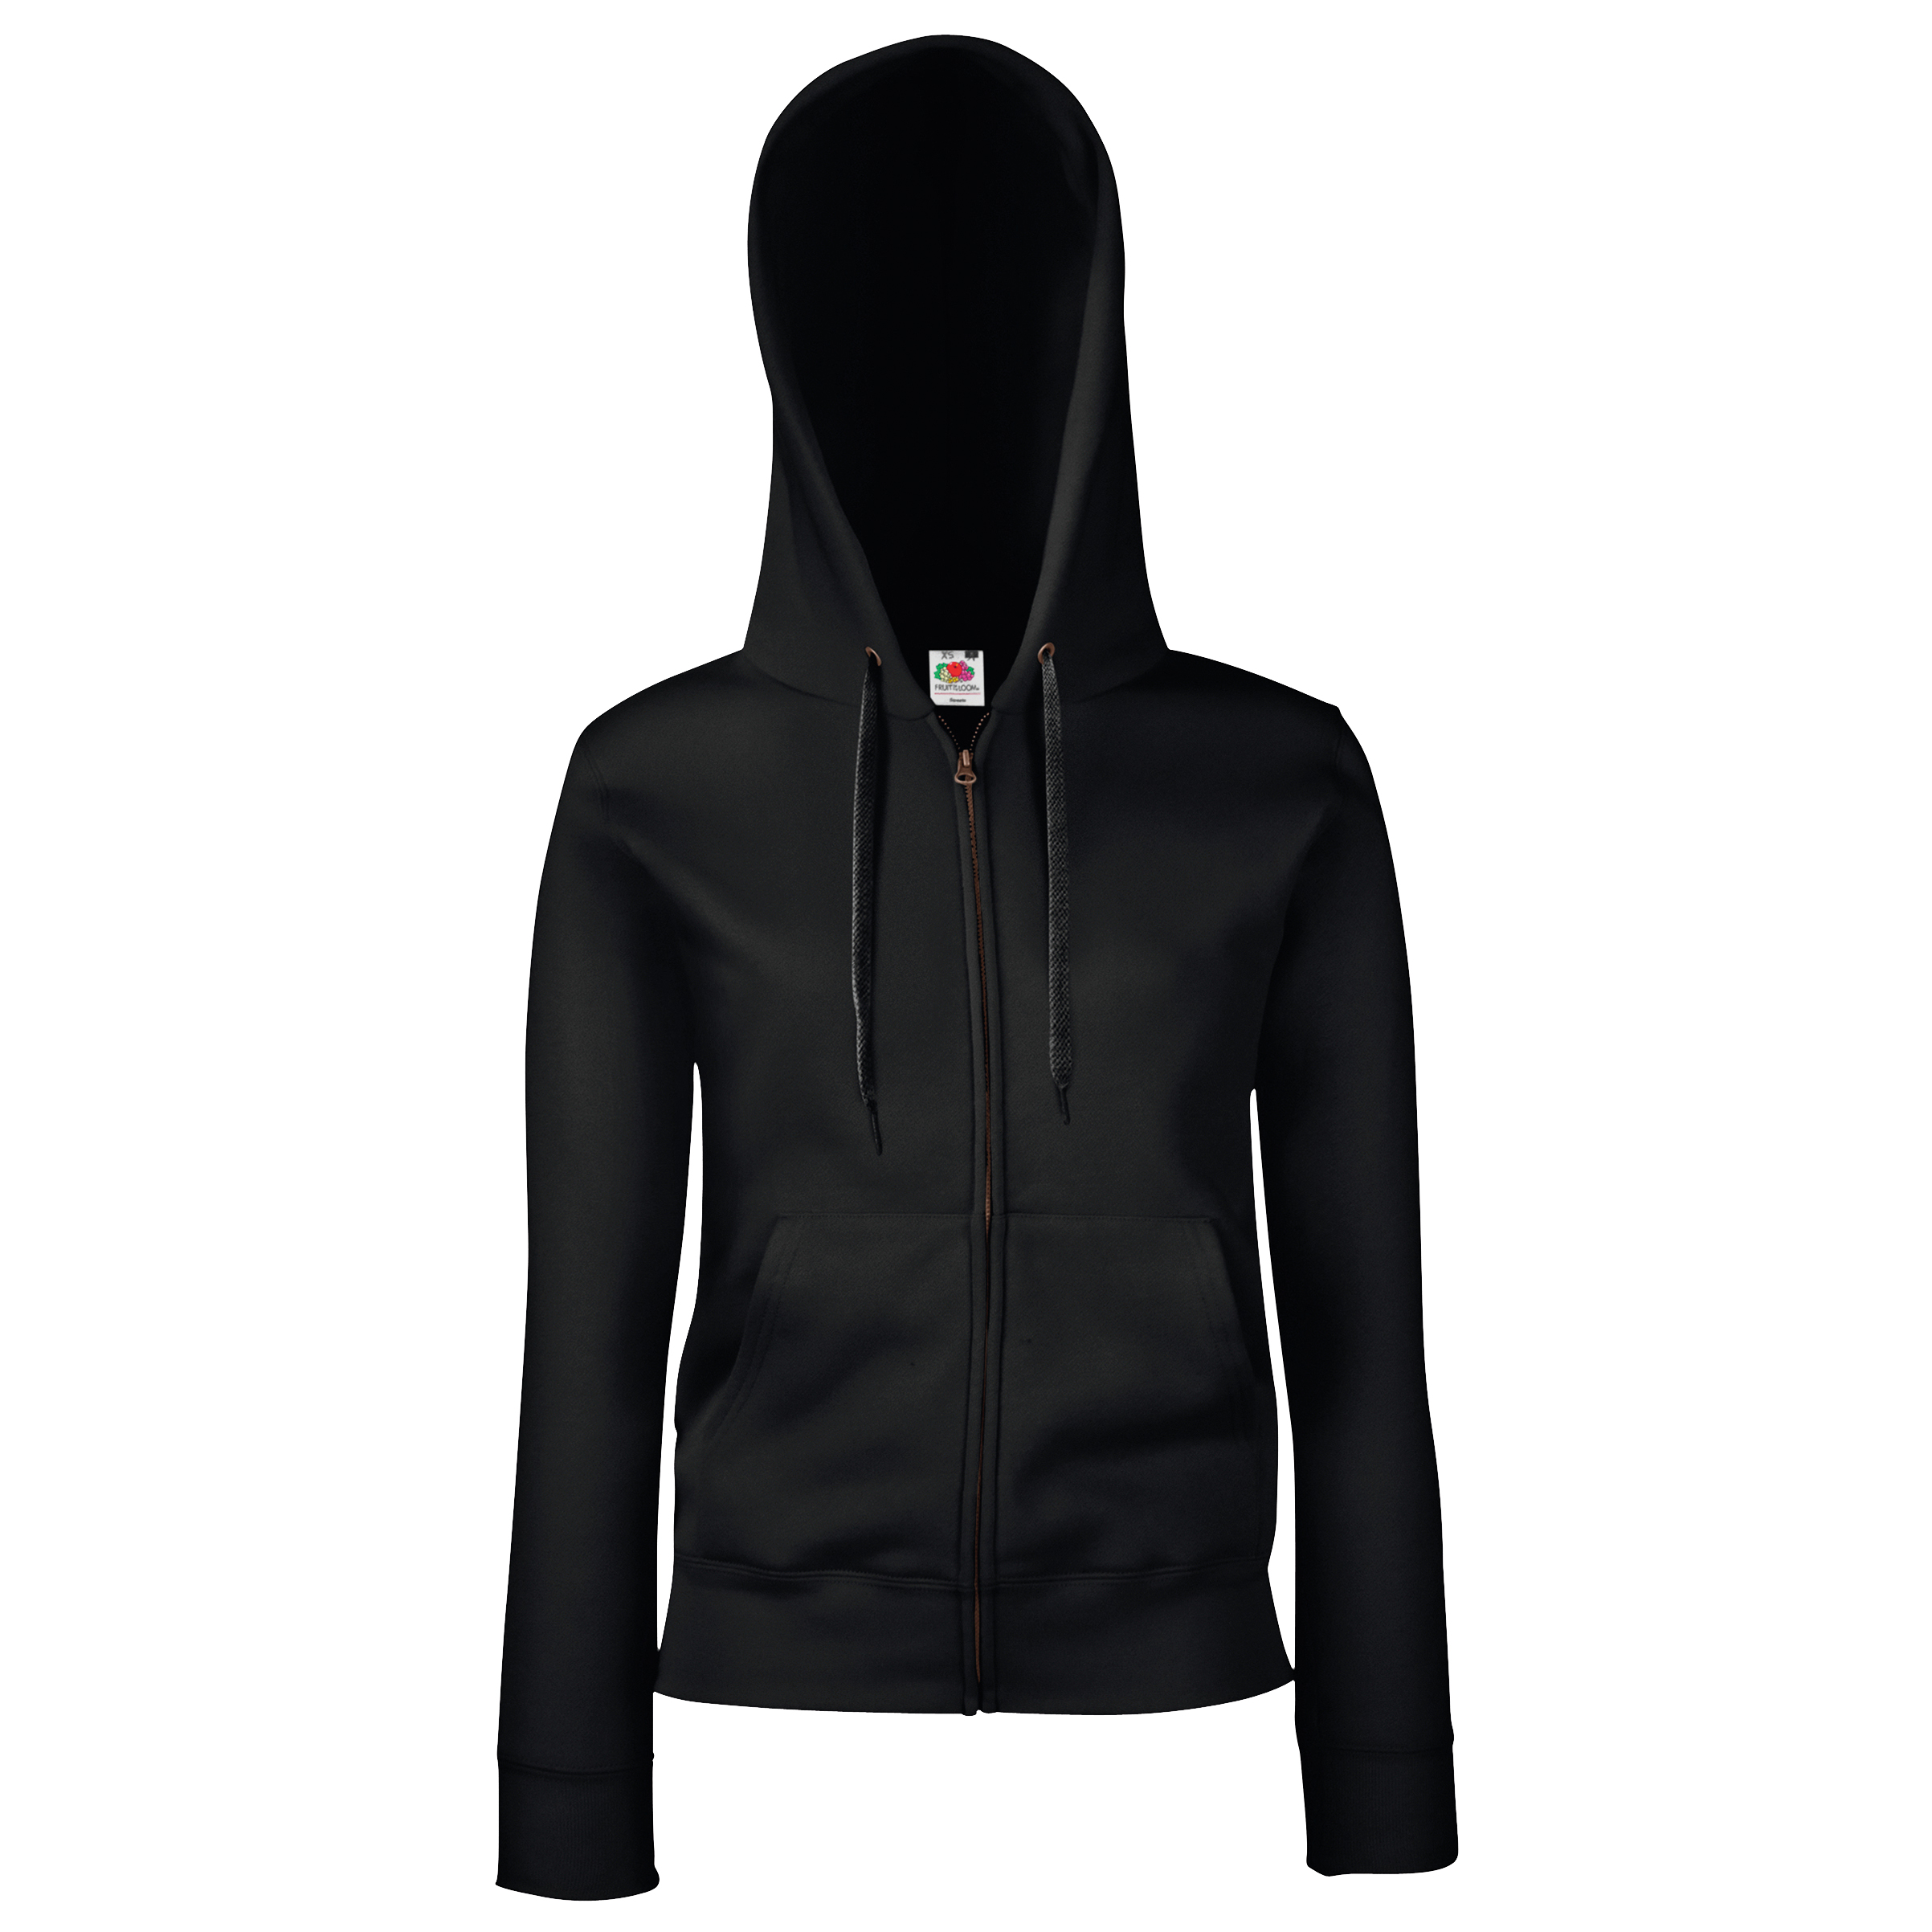 ax-httpswebsystems.s3.amazonaws.comtmp_for_downloadfruit-of-the-loom-womens-premium-70-30-hooded-sweatshirt-jacket-black.jpeg